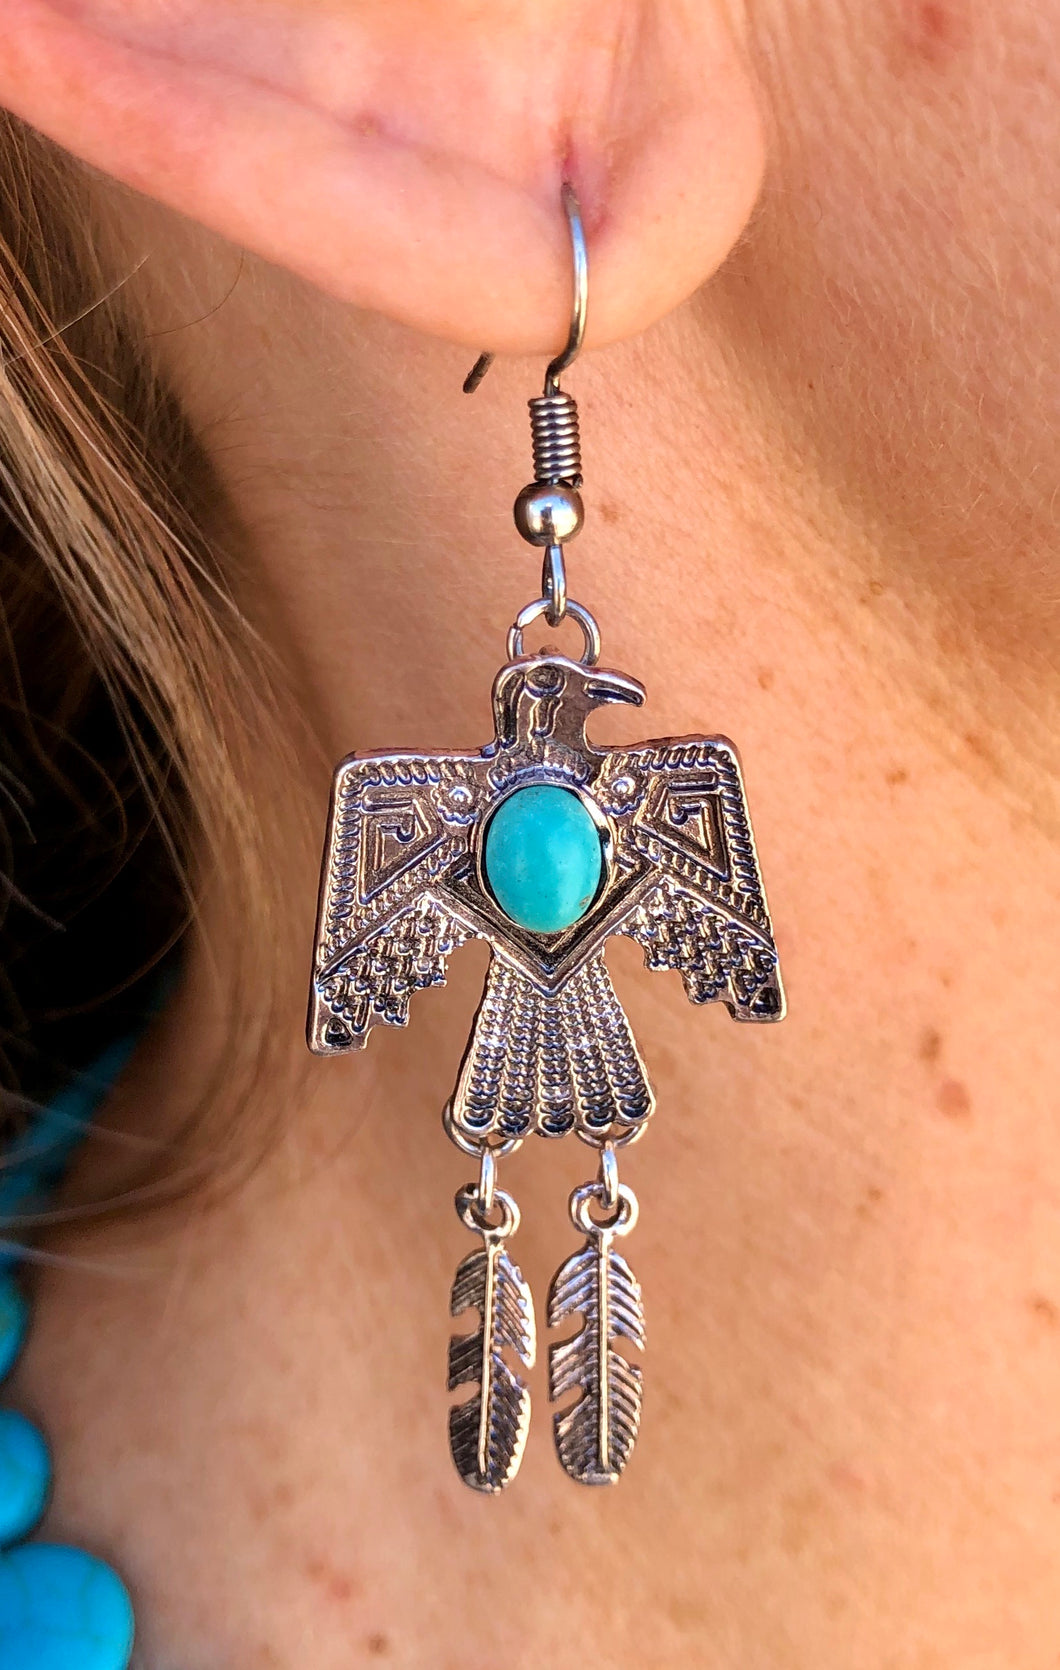 Thunderbird earrings